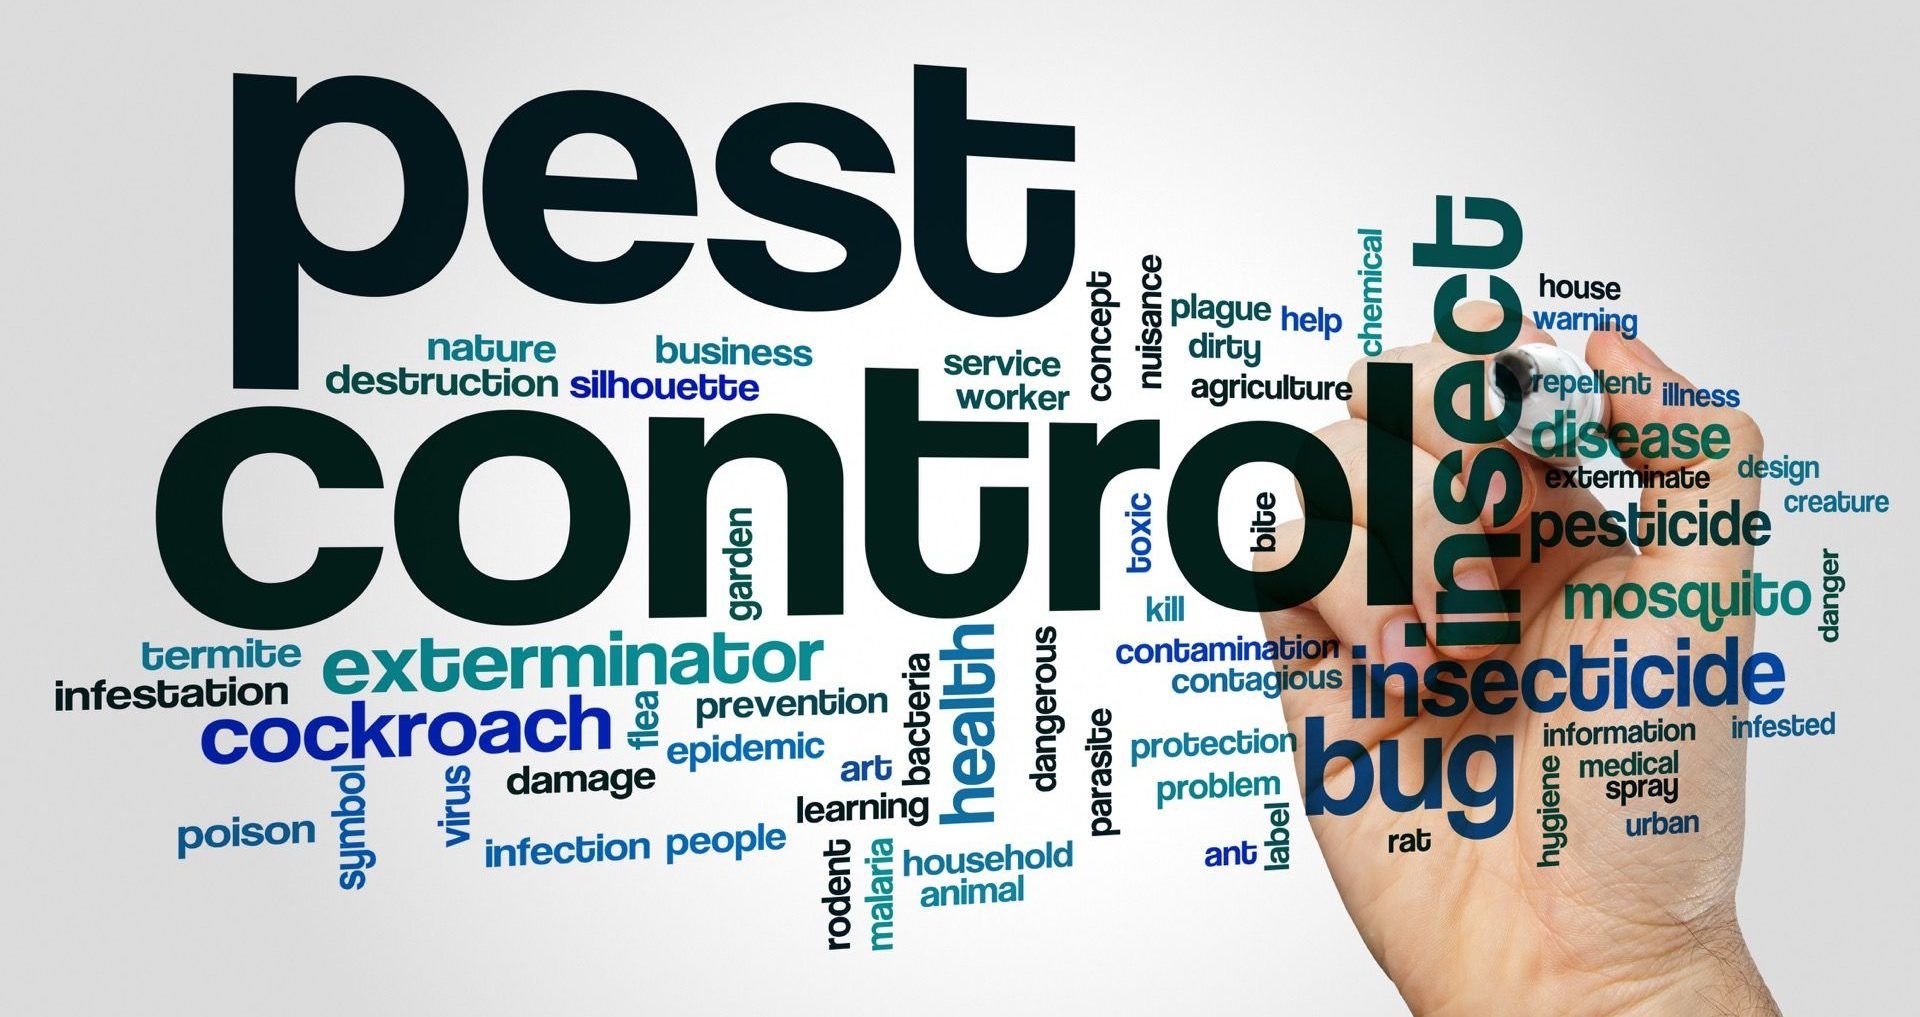 CT Pest Control: Nuisance Wildlife - Exterminator service in Danbury, Newtown, Wilton, Brookfield, Fairfield County, CT